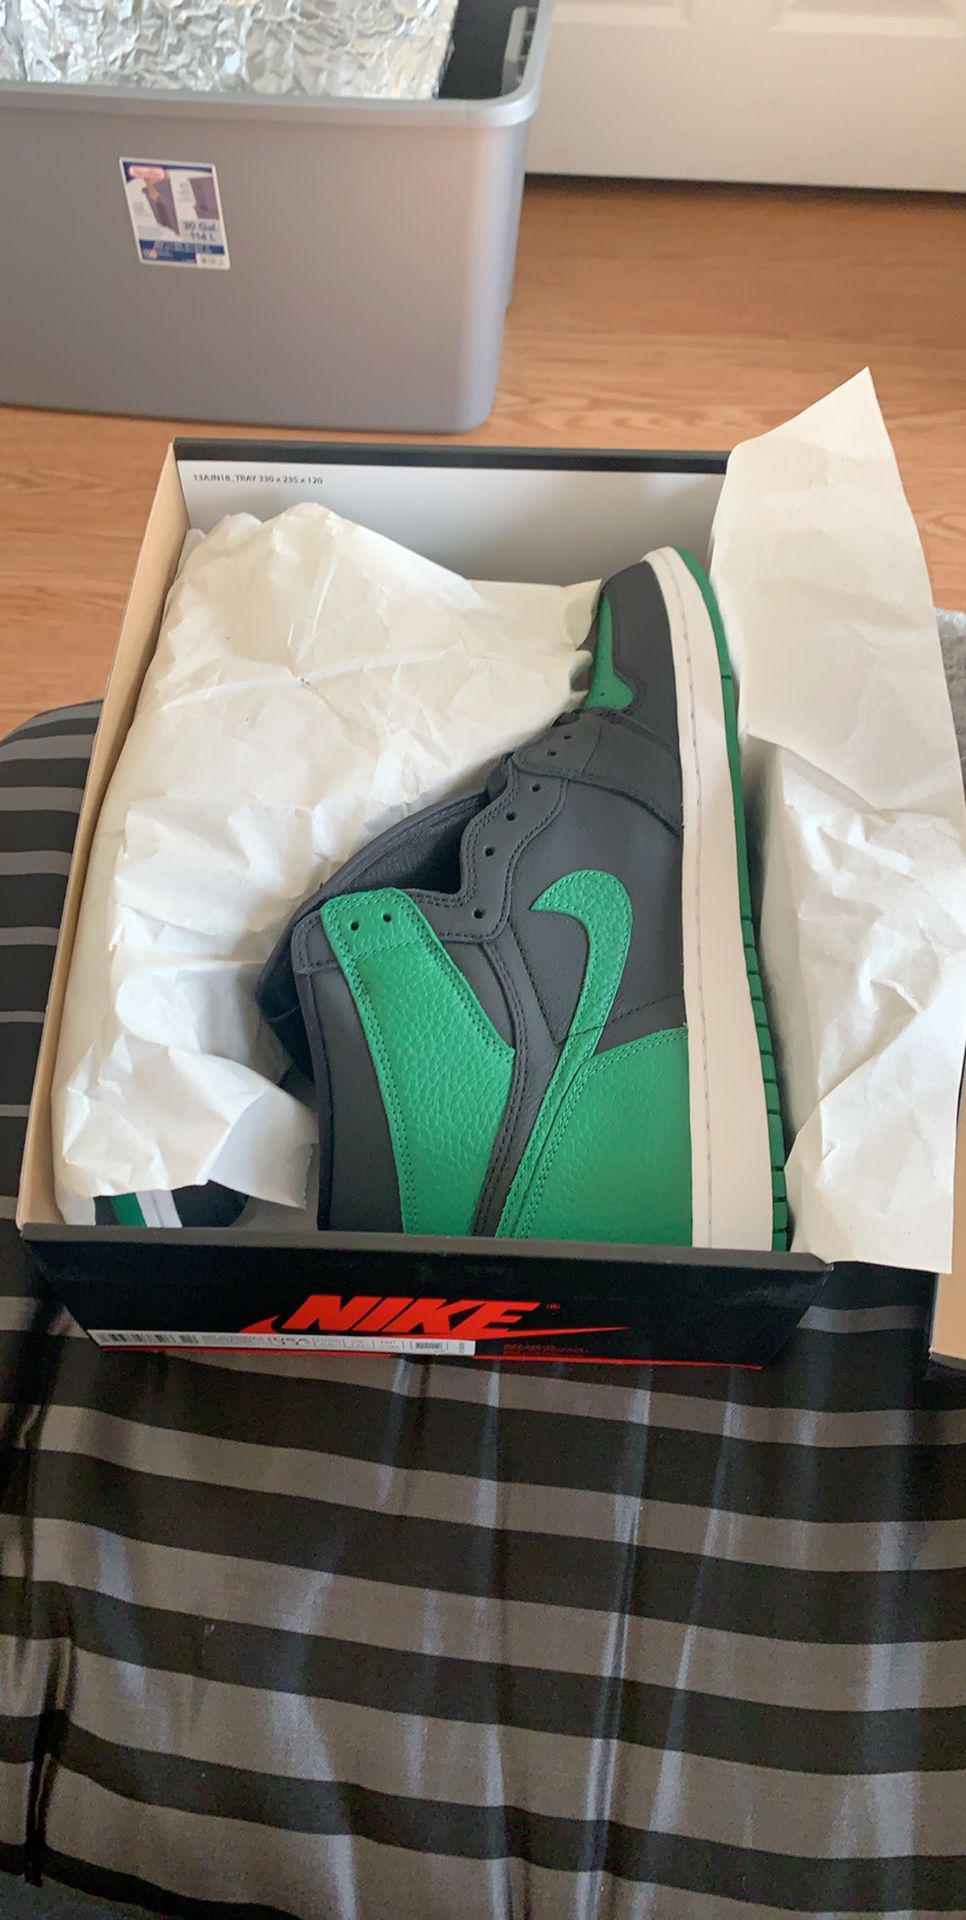 Air Jordan Retro 1 “Pine Green” 2.0 size 11.5